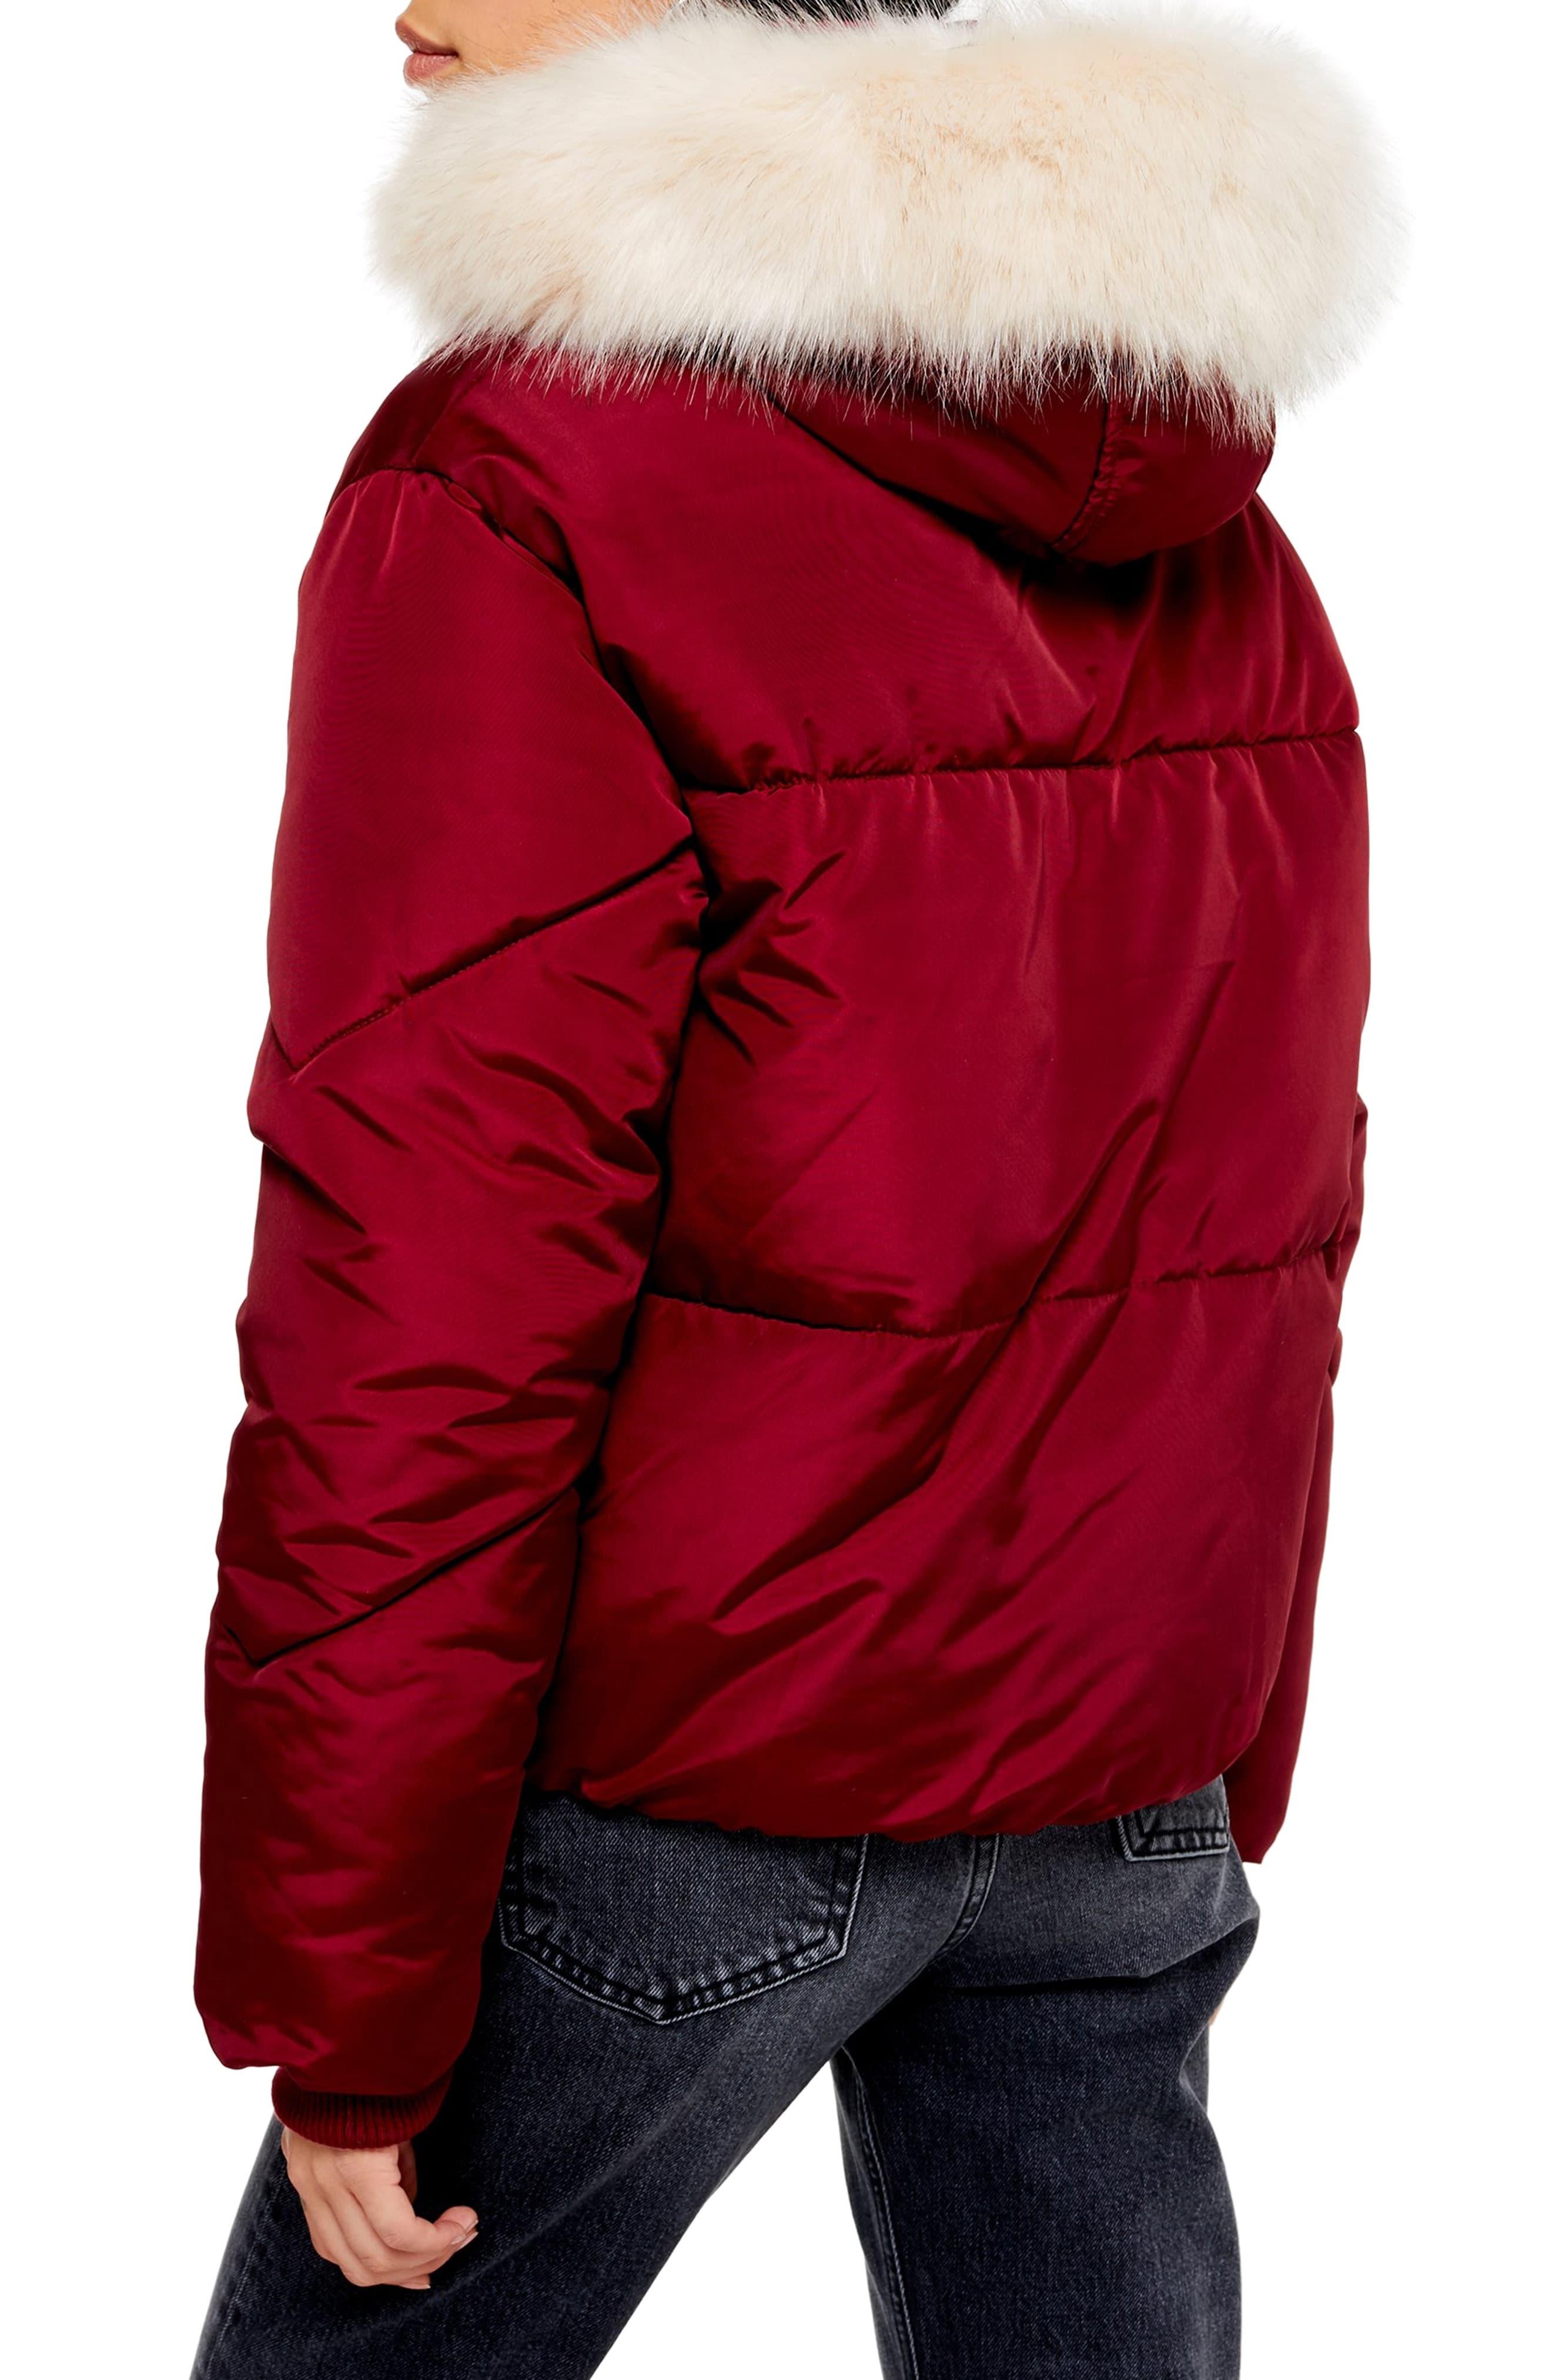 Red Puffer Jacket Topshop Sale, 56% OFF | www.jci.ee